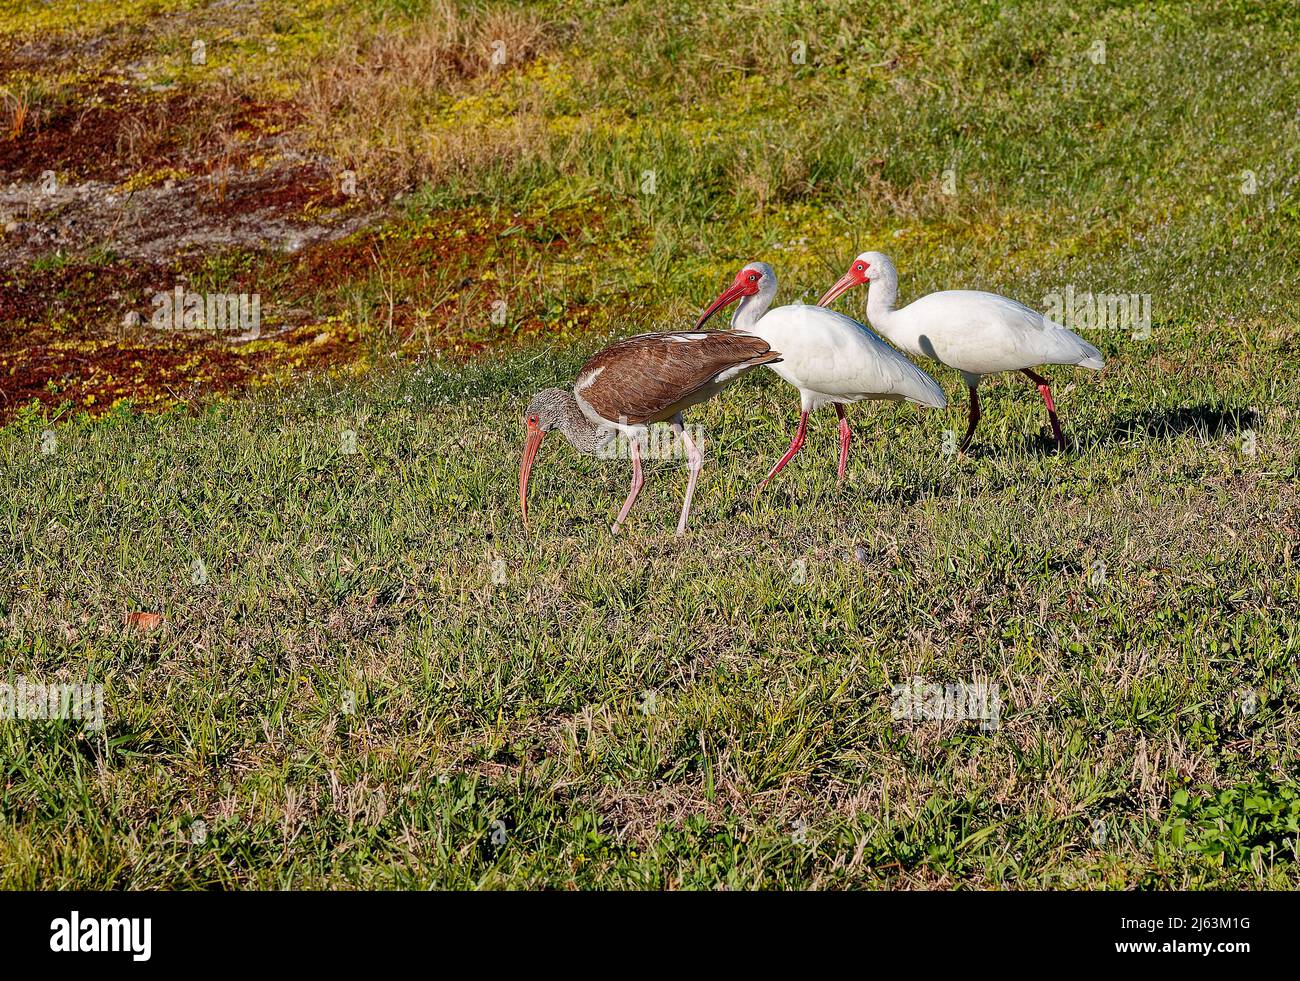 White Ibis; walking on grass, 2 mature, 1 immature, animals; backyard birds; wildlife, bright curved beaks, red legs, Eudocimus albus, FL, Florida, wi Stock Photo